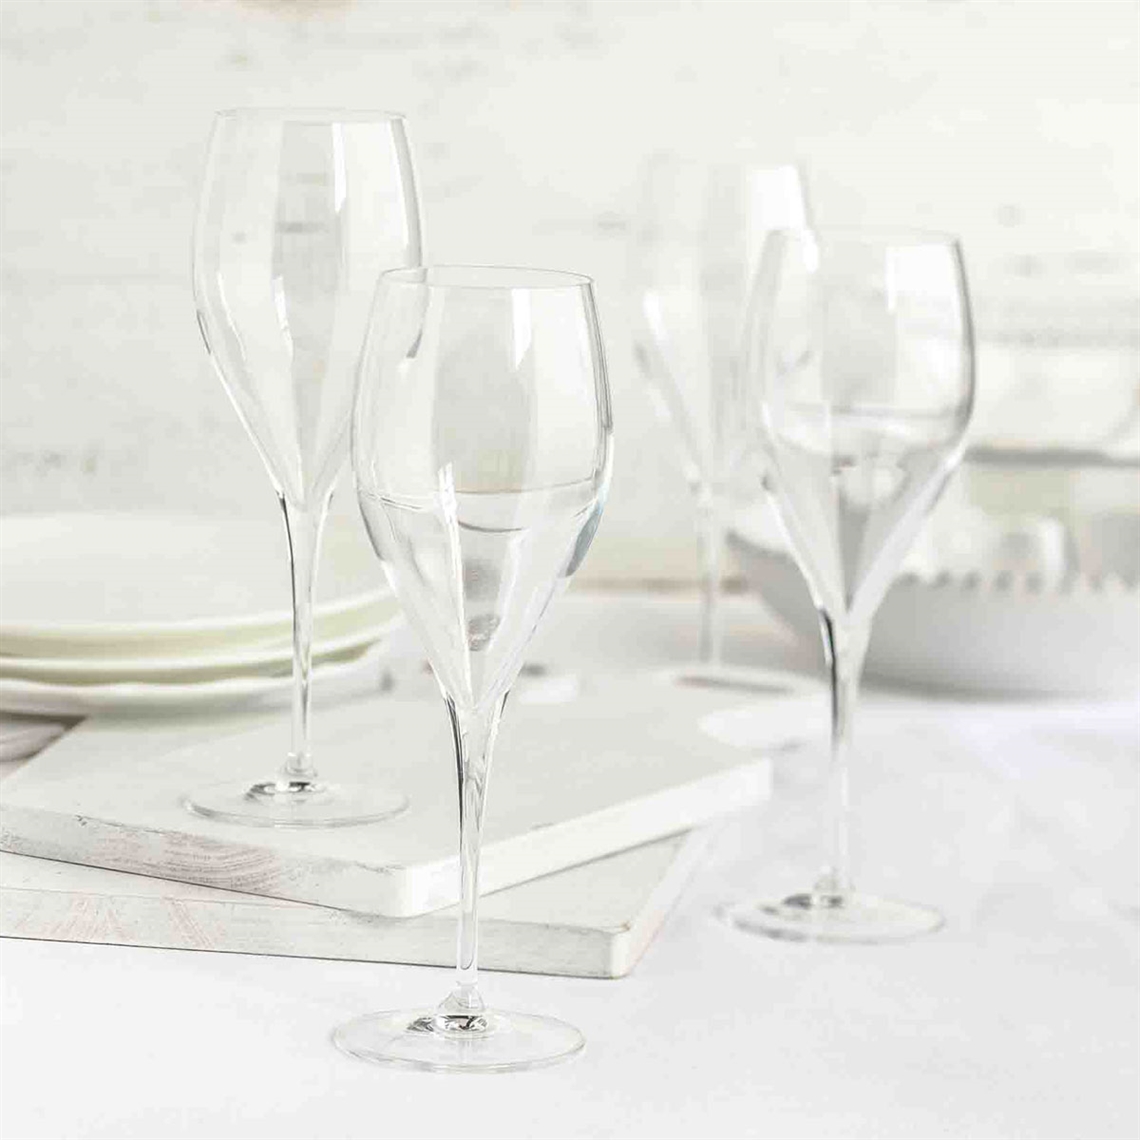 Lehmann Glass Opale Champagne / Sparkling Wine Glass 100ml - Set of 6